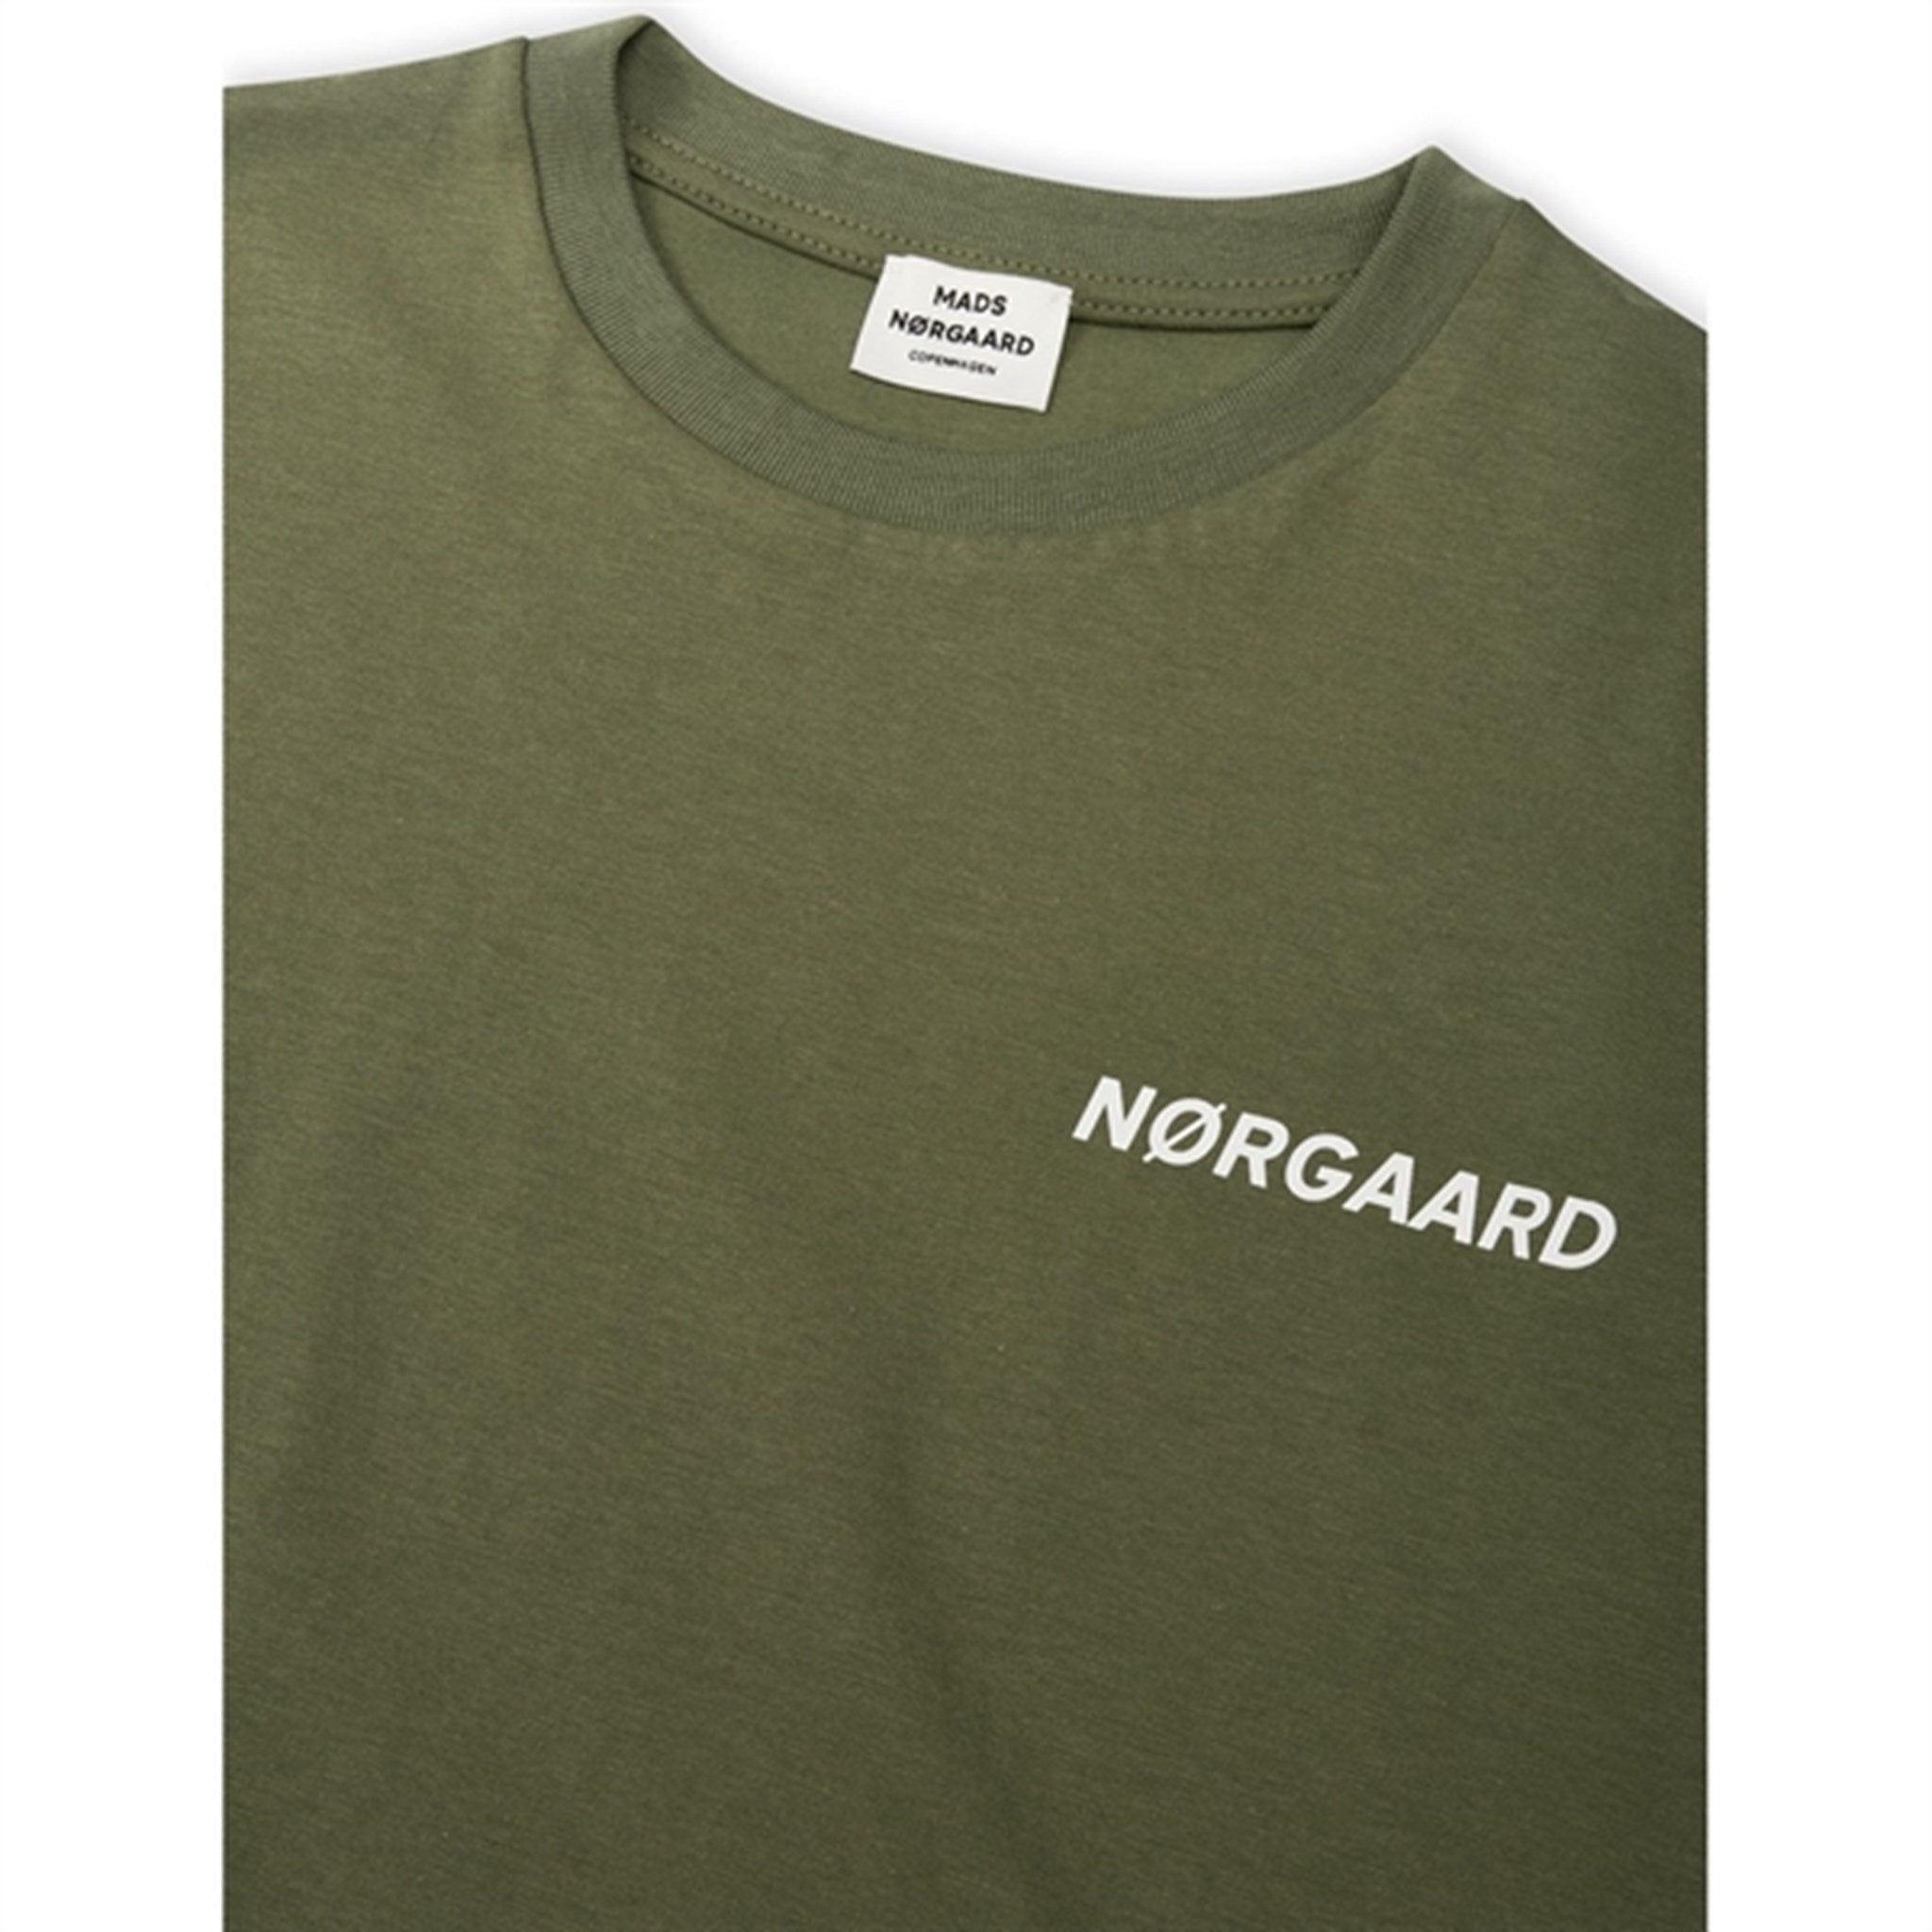 Mads Nørgaard Printed T-Shirt Thorlino T-Shirt Olivine 2